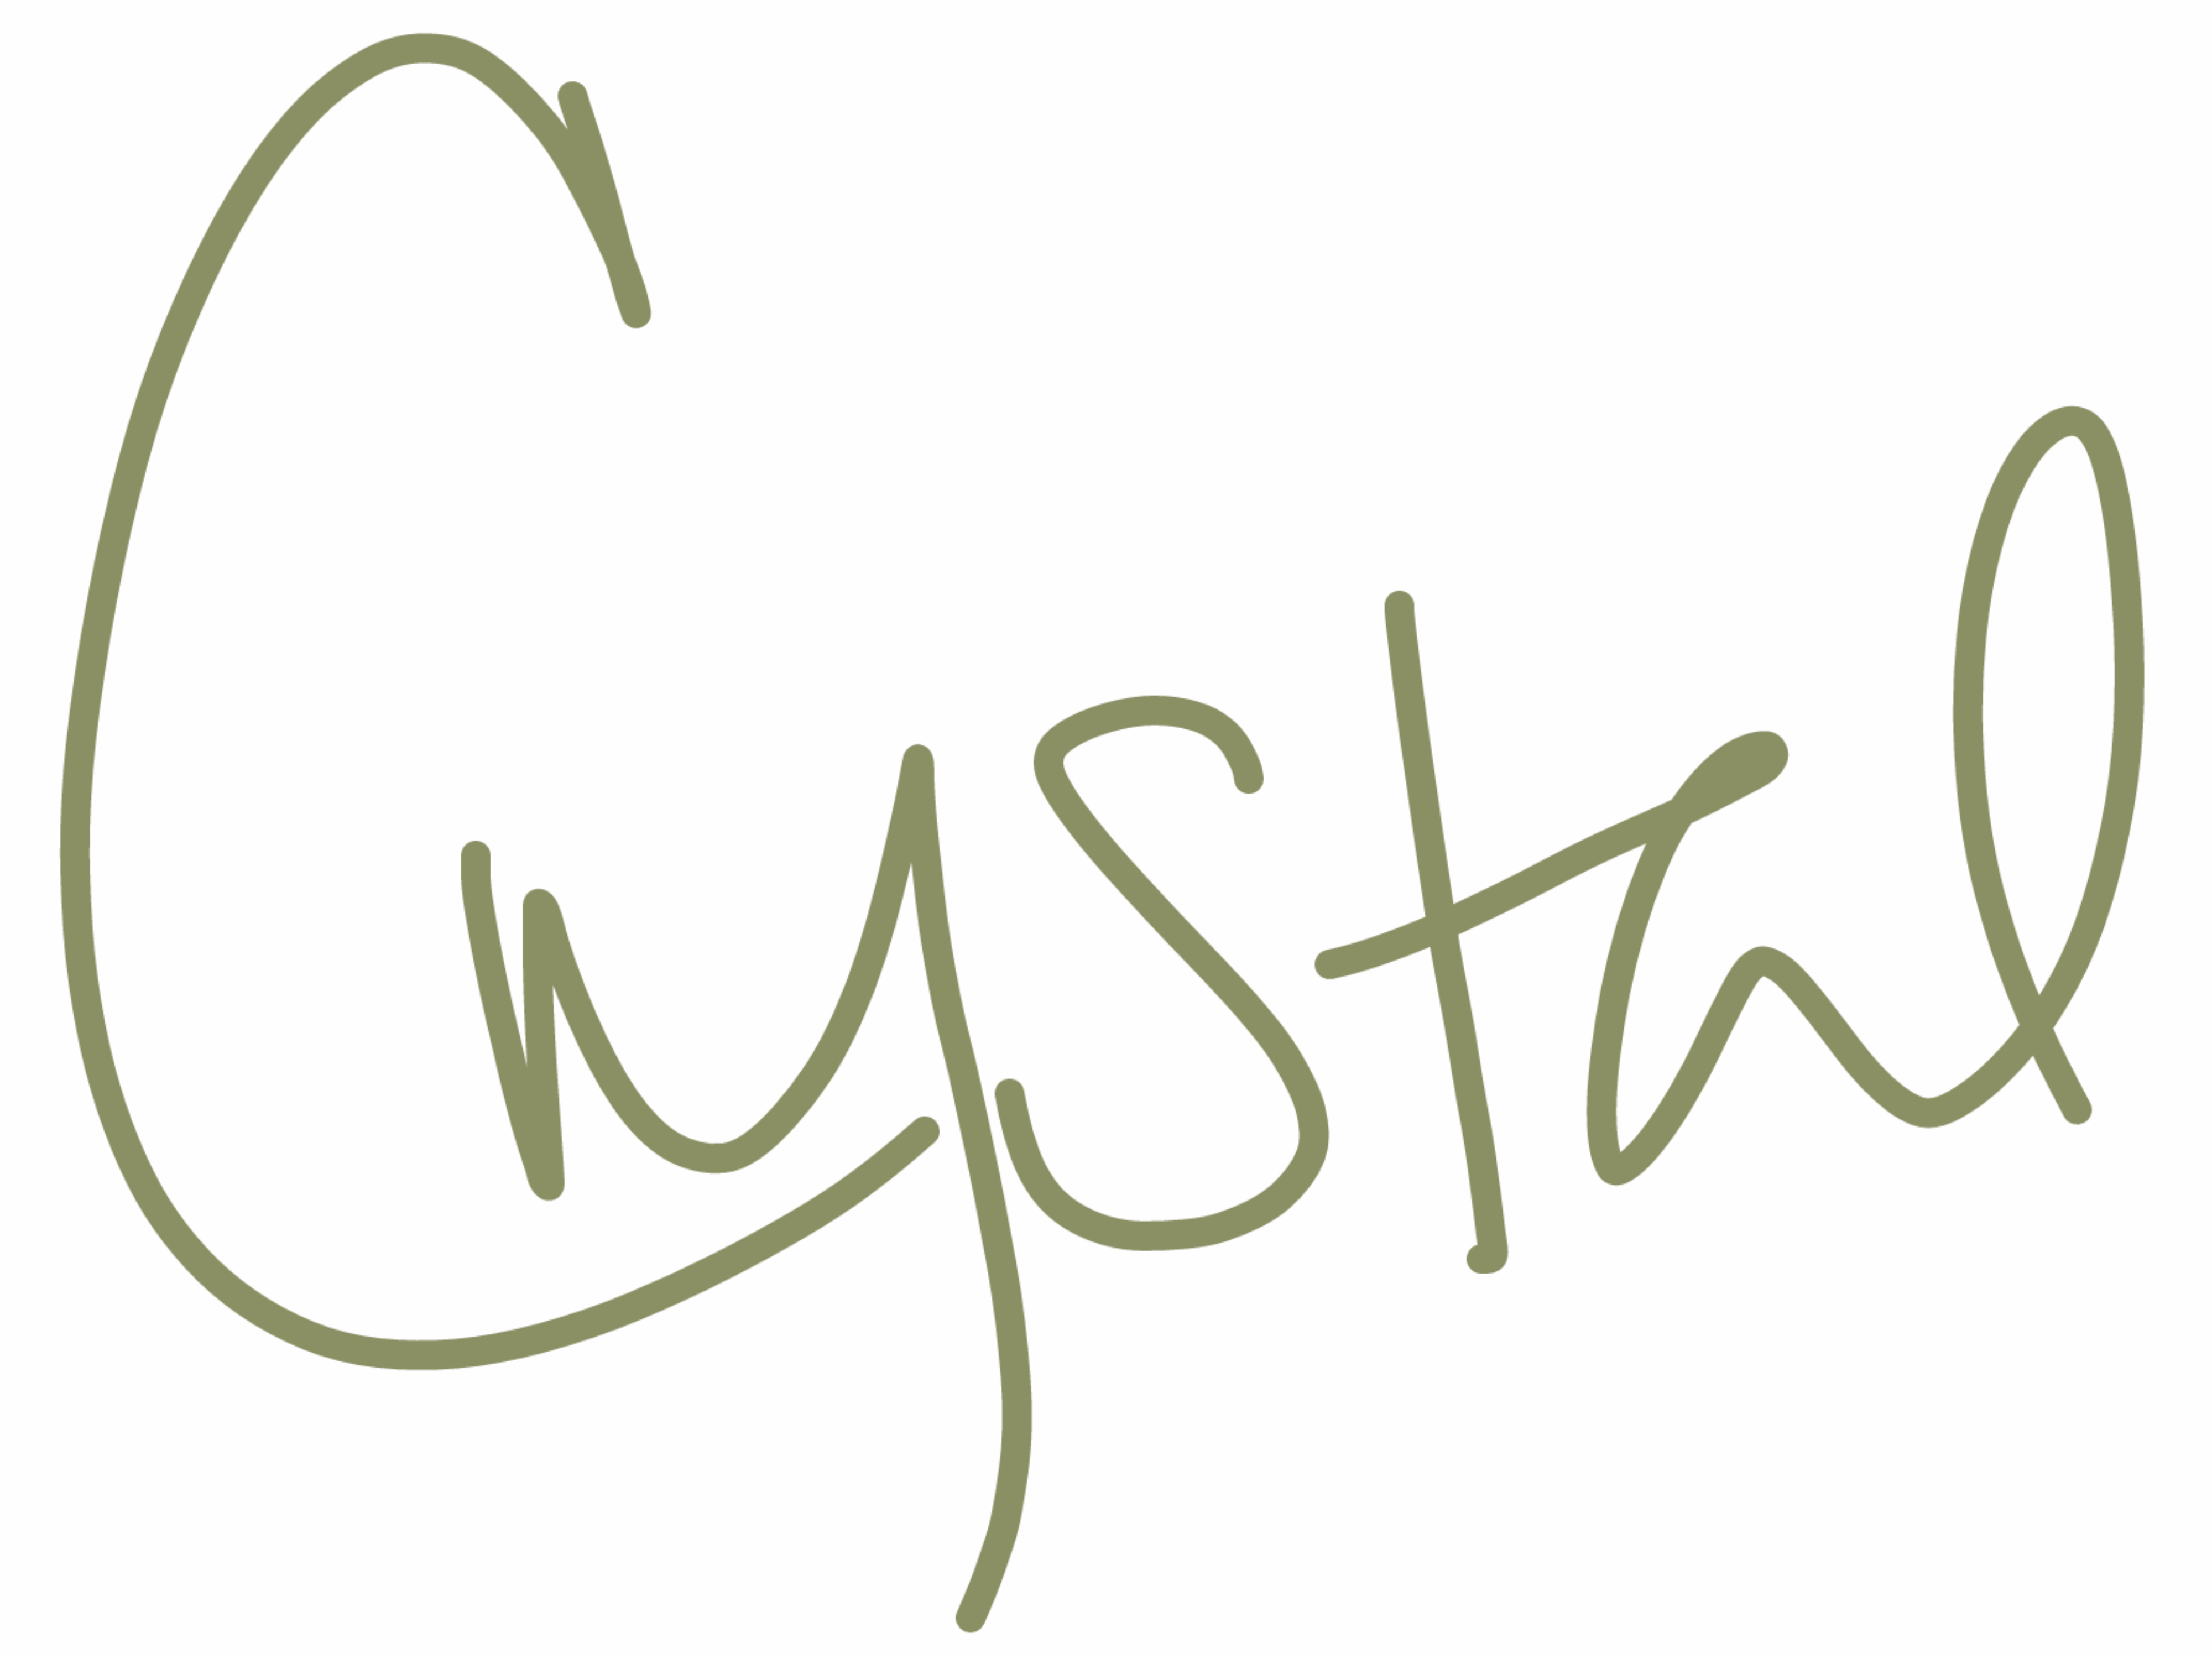 Crystal's Signature